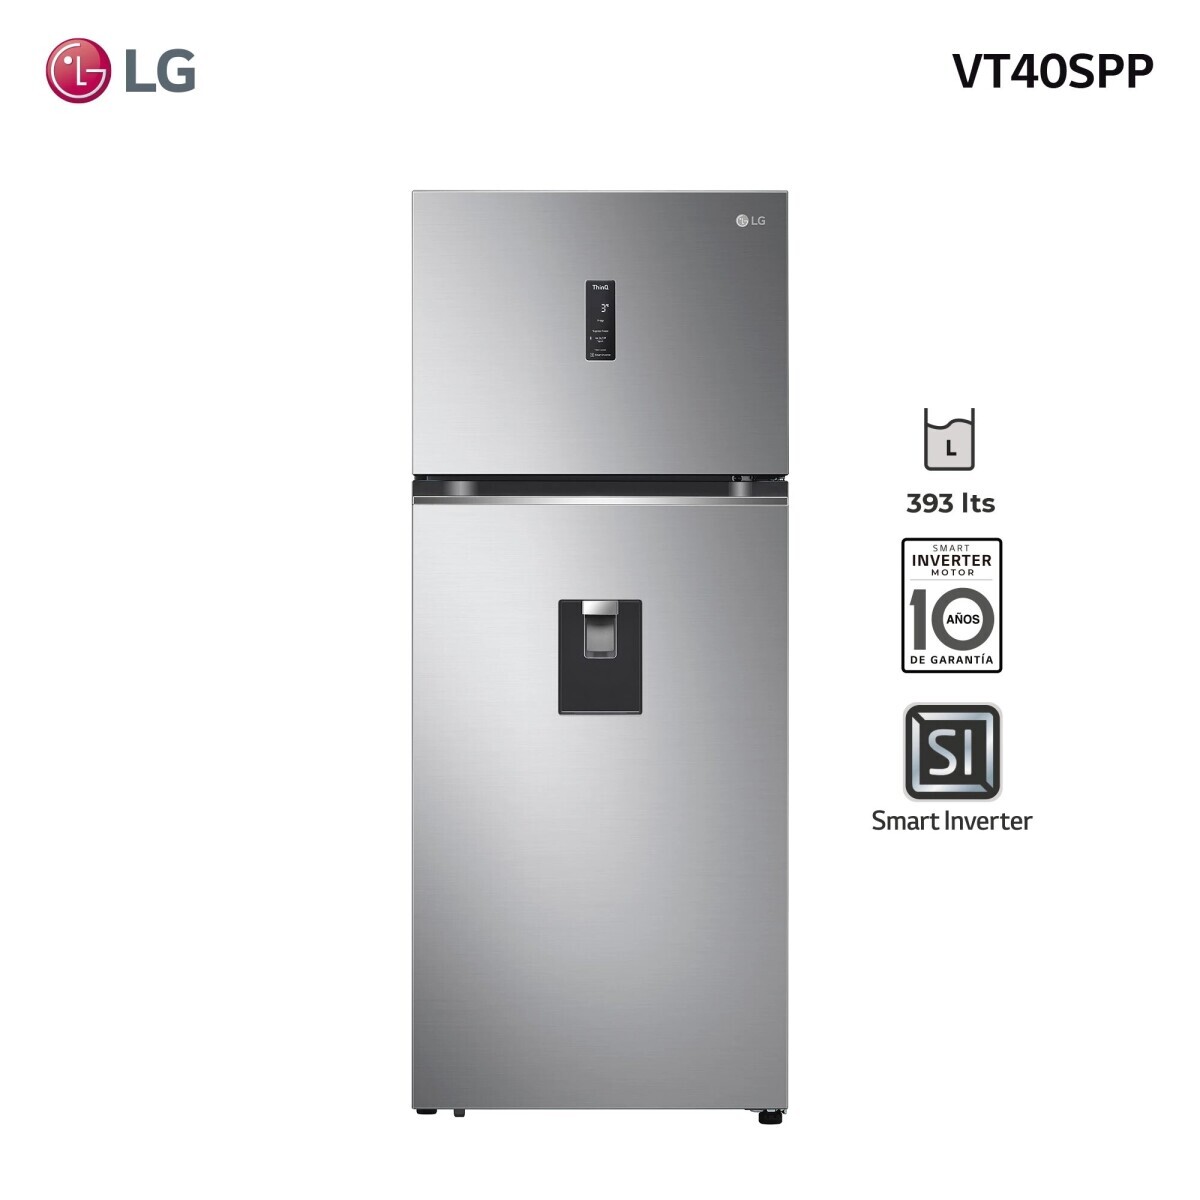 Refrigerador LG 393 lts VT40SPP1 con dispensador 